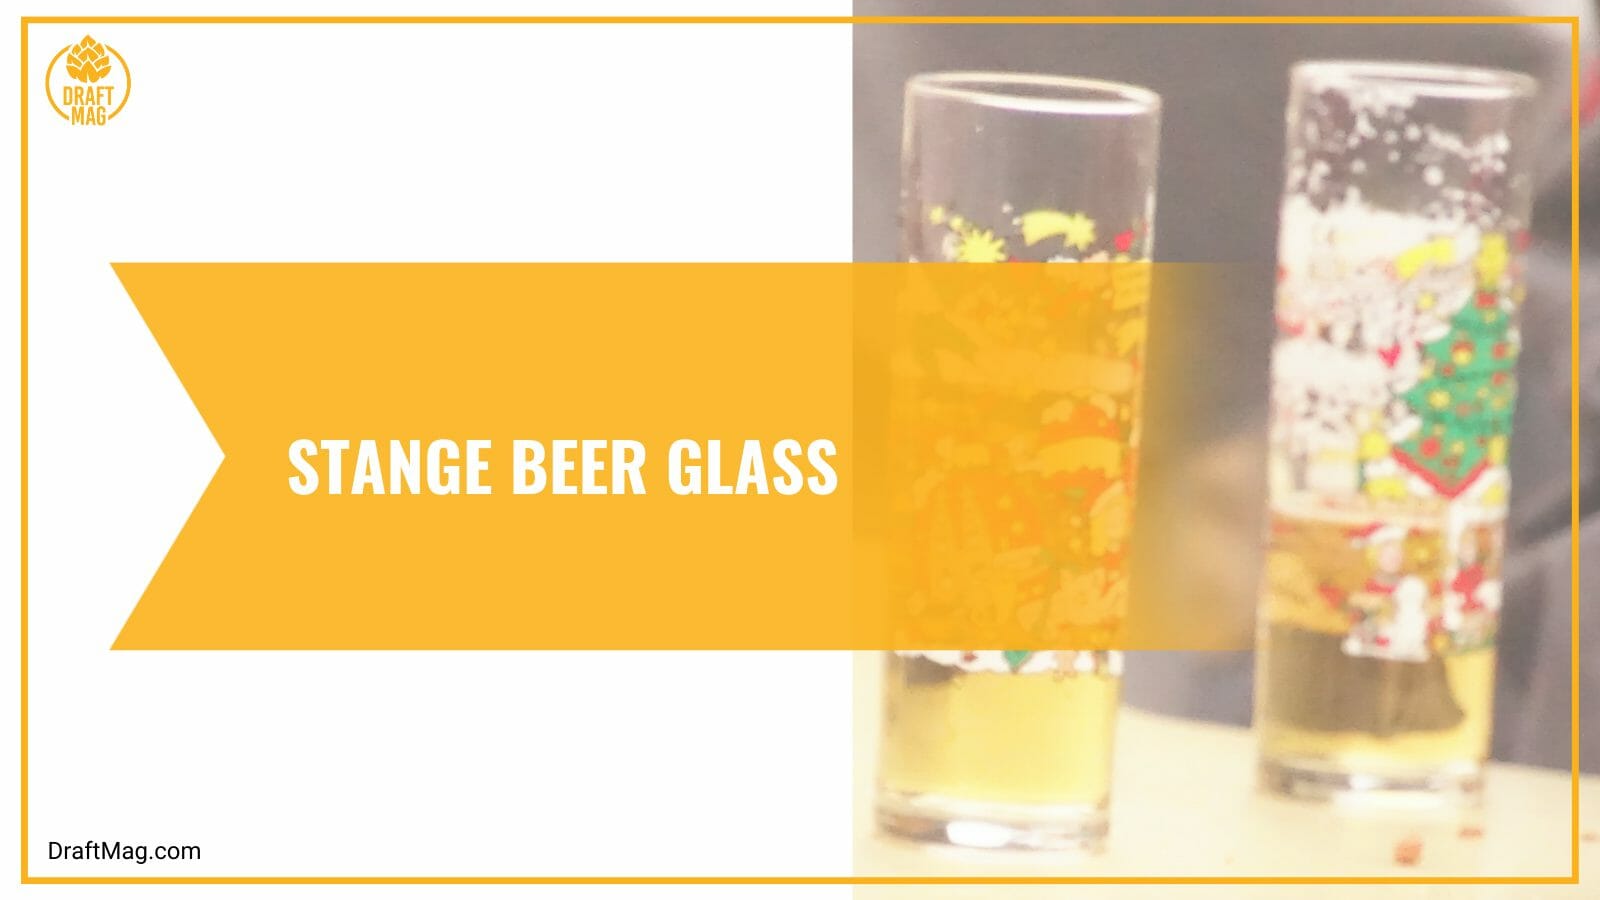 Stange beer glass